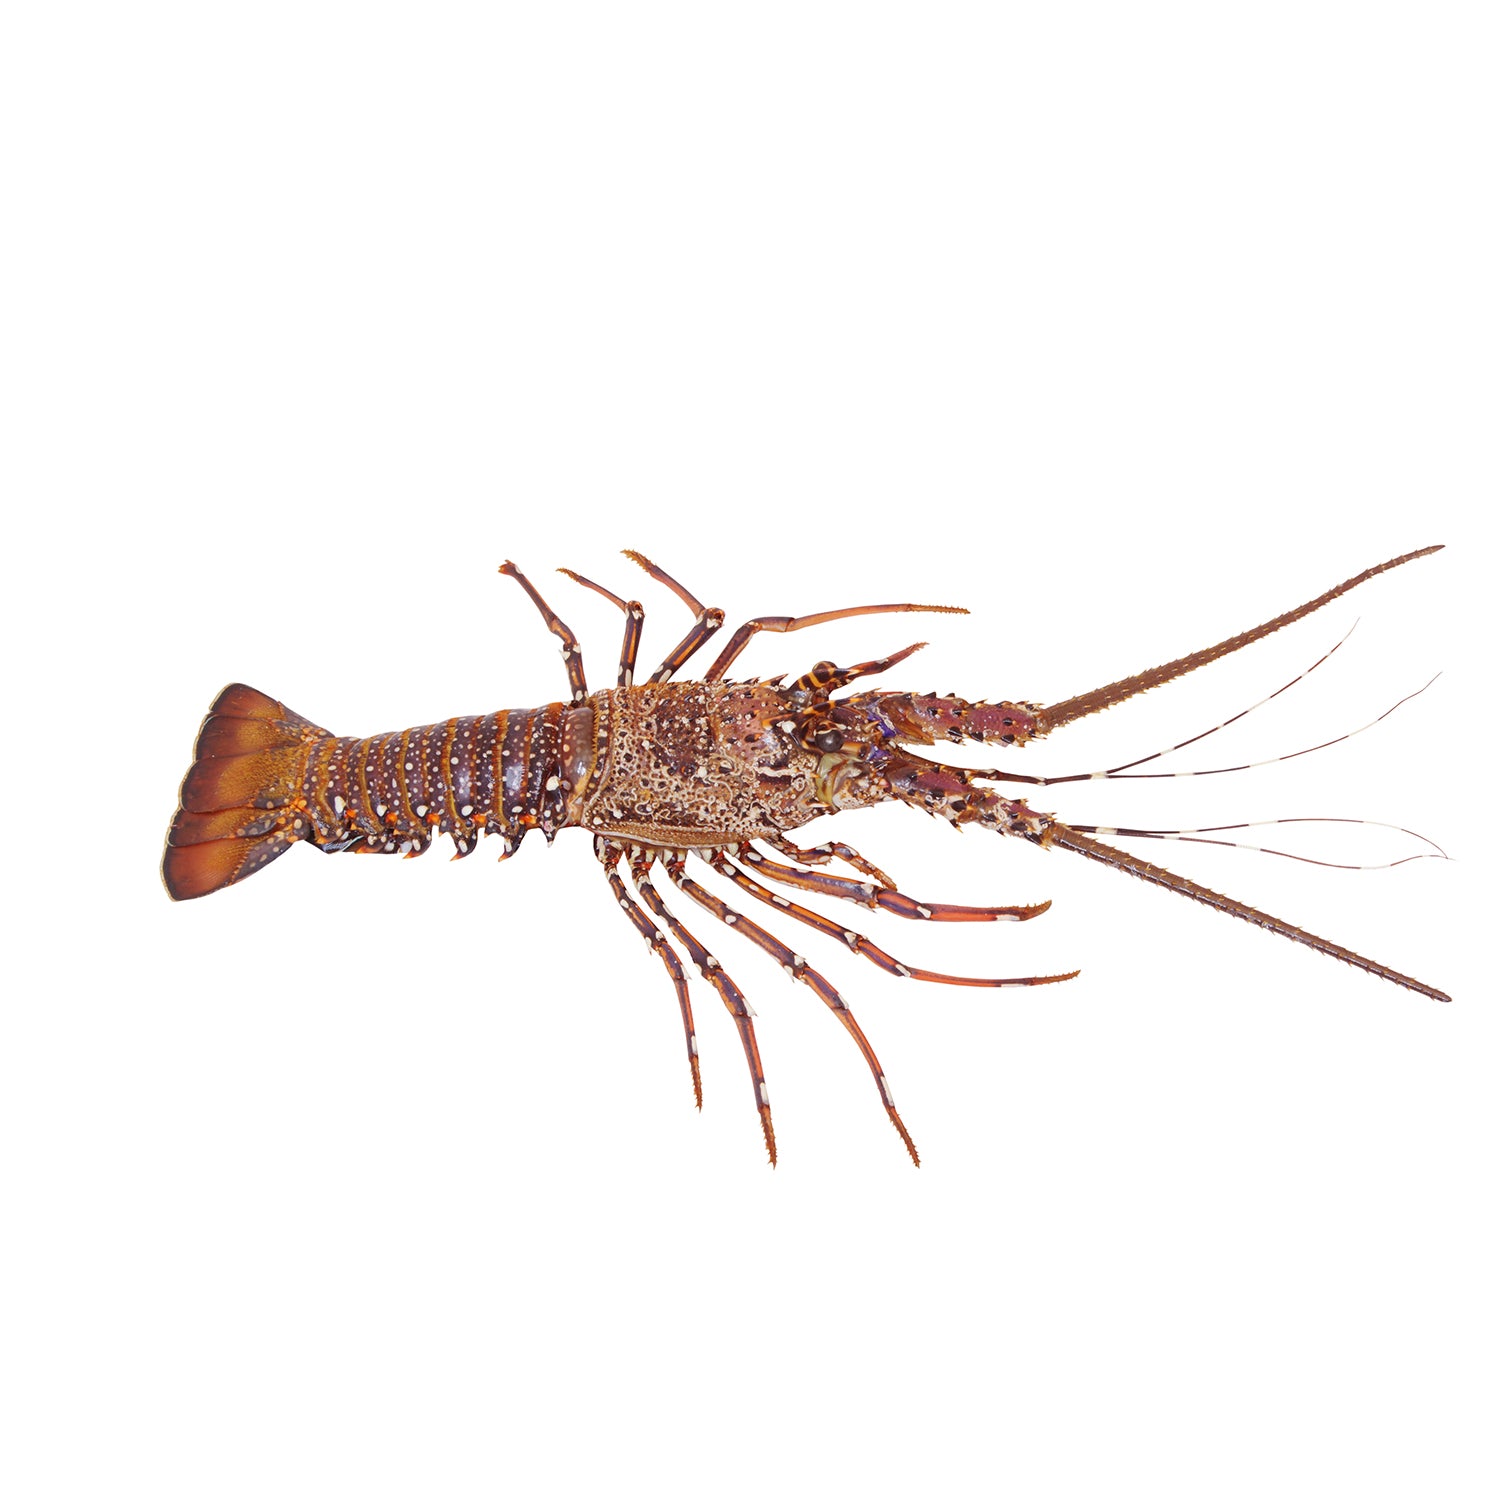 Lobster - استاكوزا